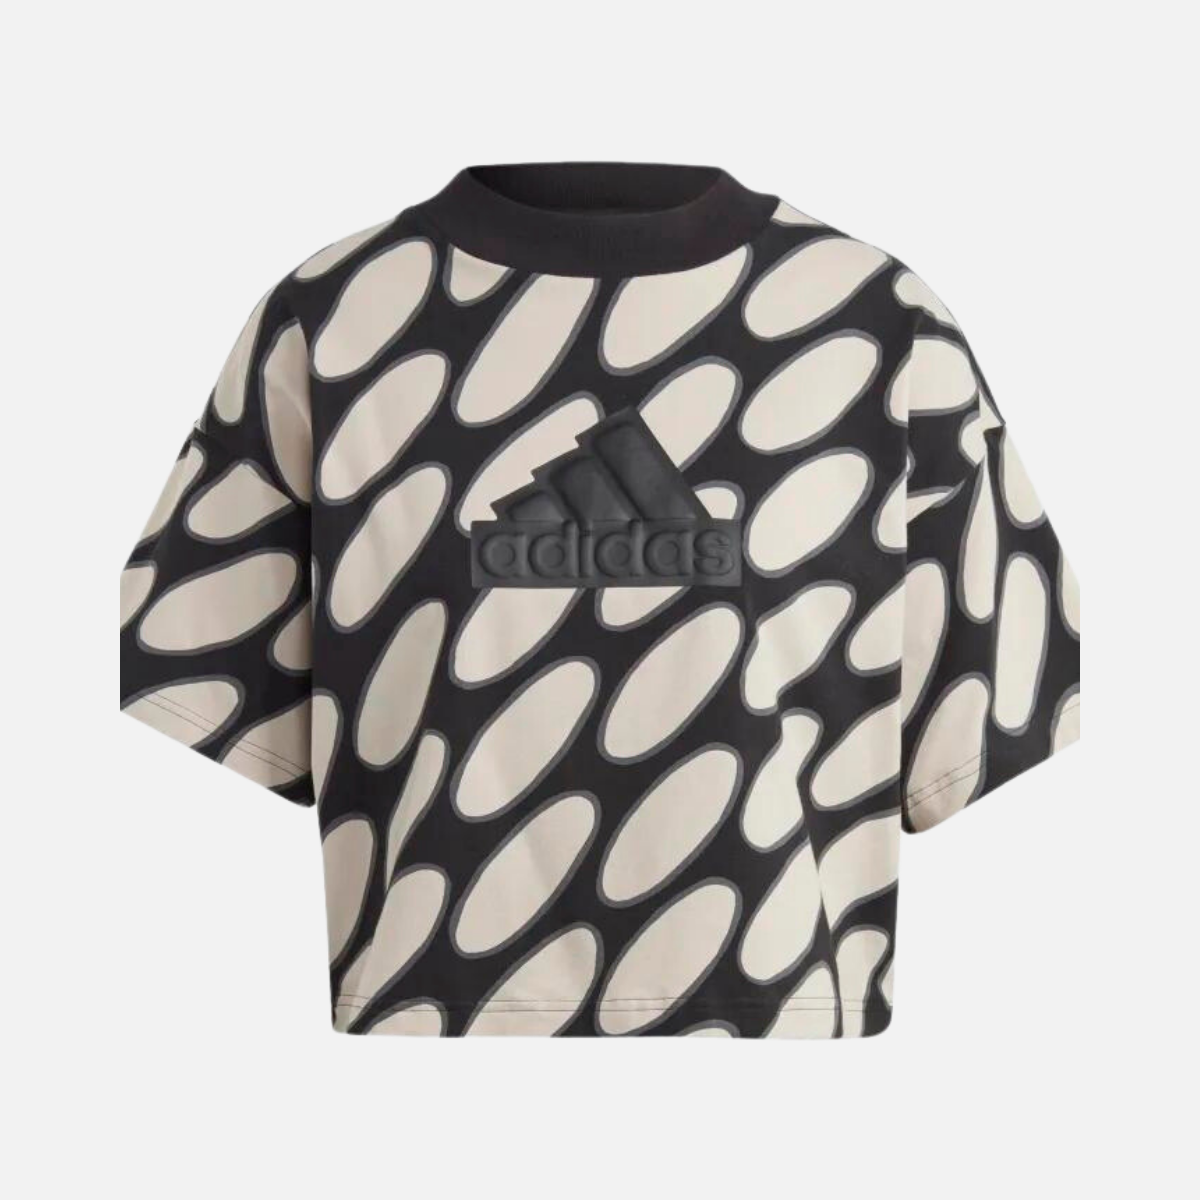 Adidas Marimekko future lcons 3 Stripes Women Sportswear T-Shirt -Light Brown/Black/Grey Six